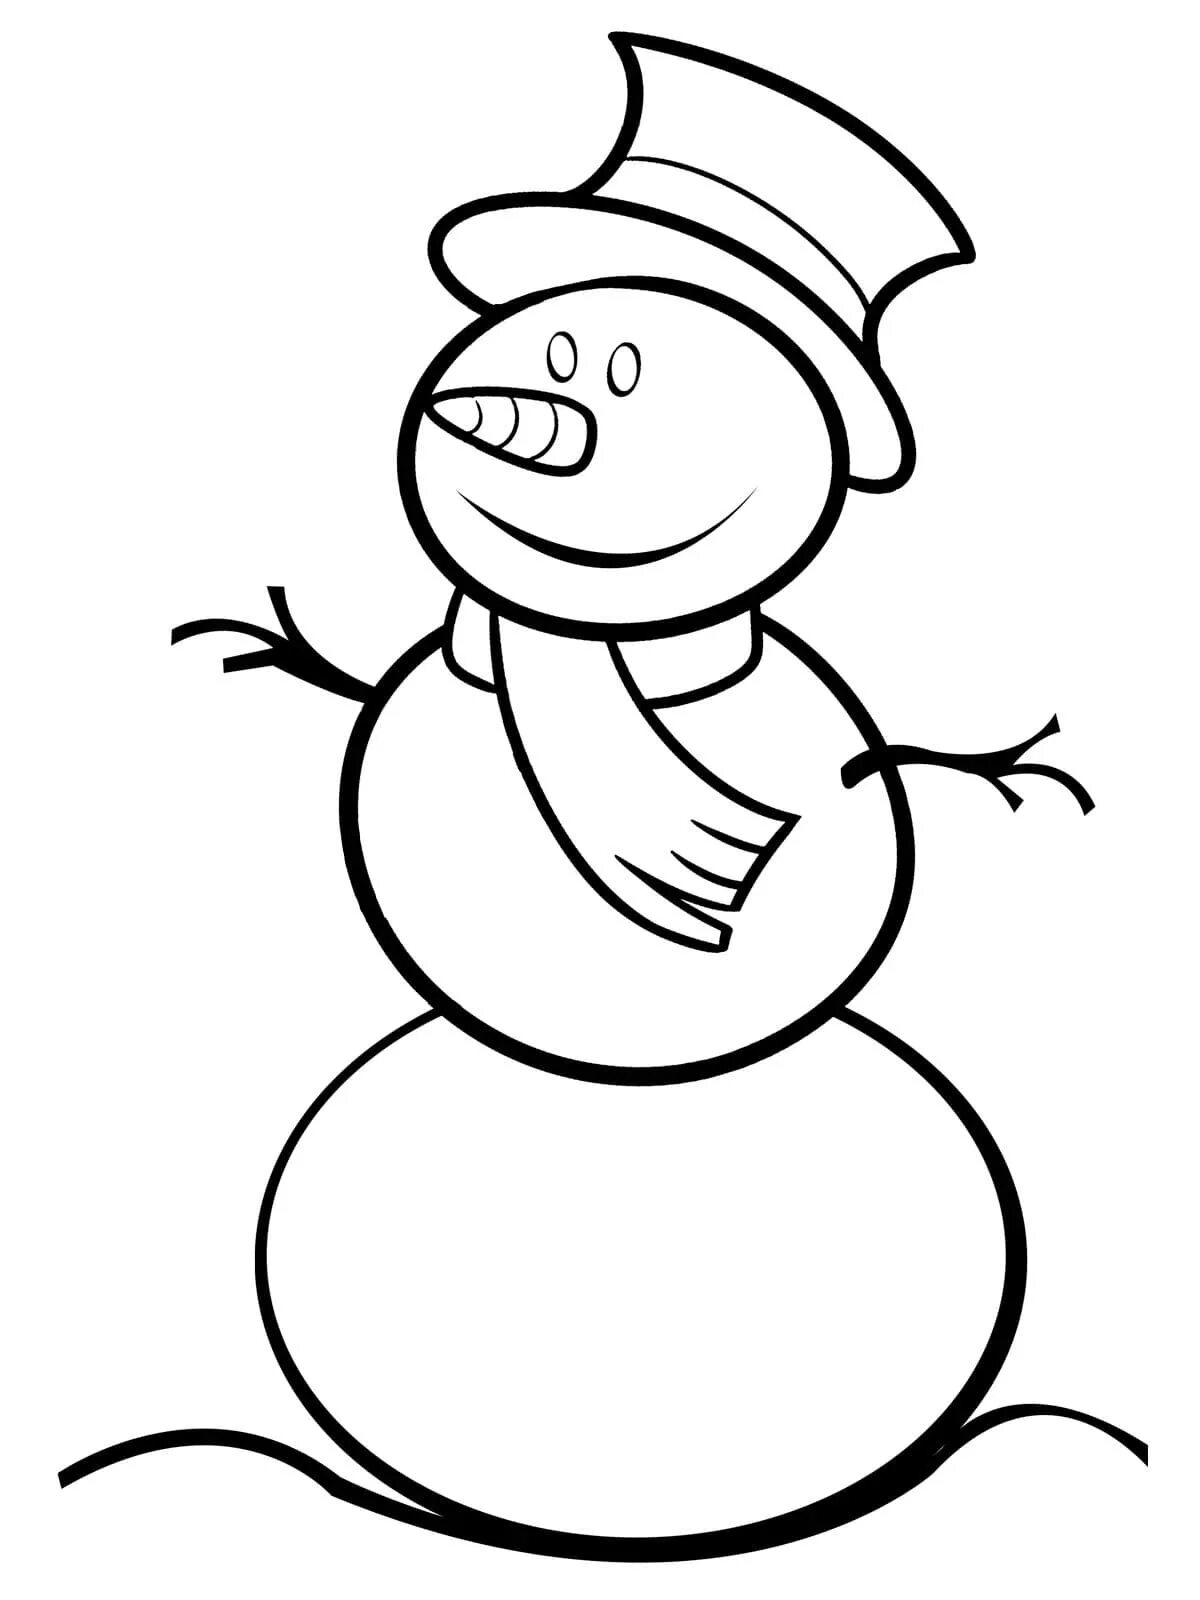 Coloring page adorable children's snowman